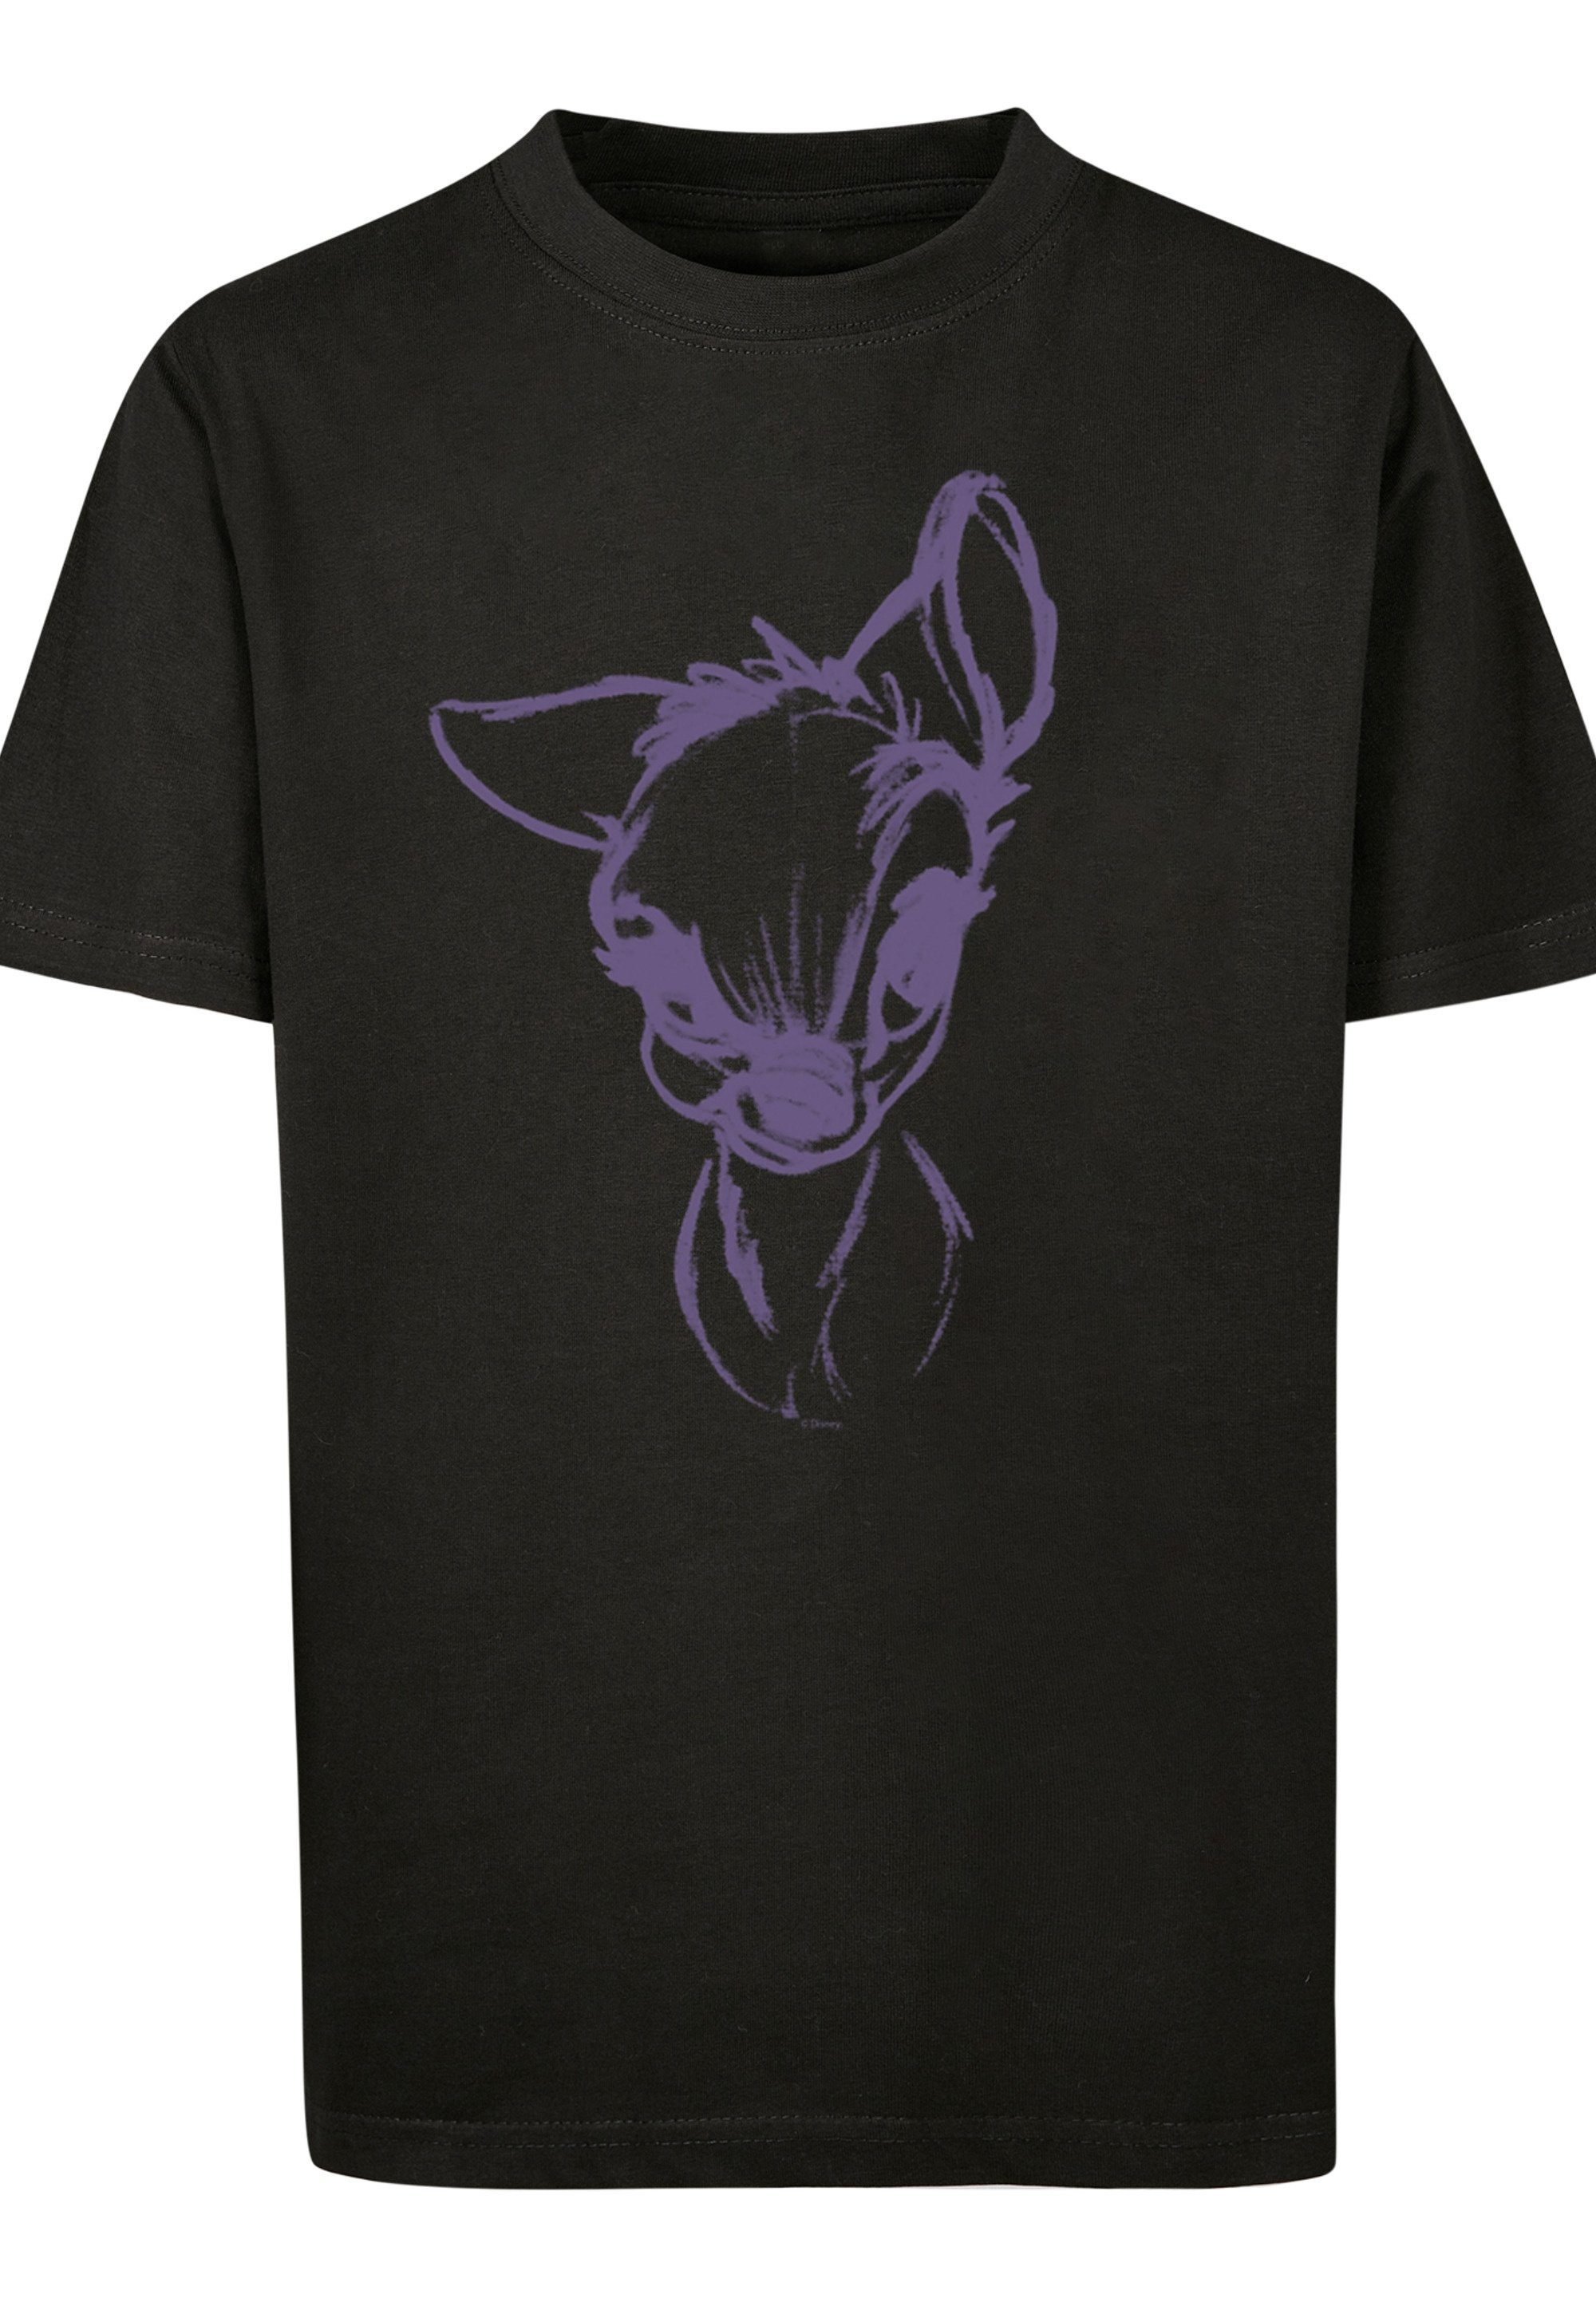 T-Shirt Kinder,Premium Disney F4NT4STIC schwarz Bambi Merch,Jungen,Mädchen,Bedruckt Mood Unisex